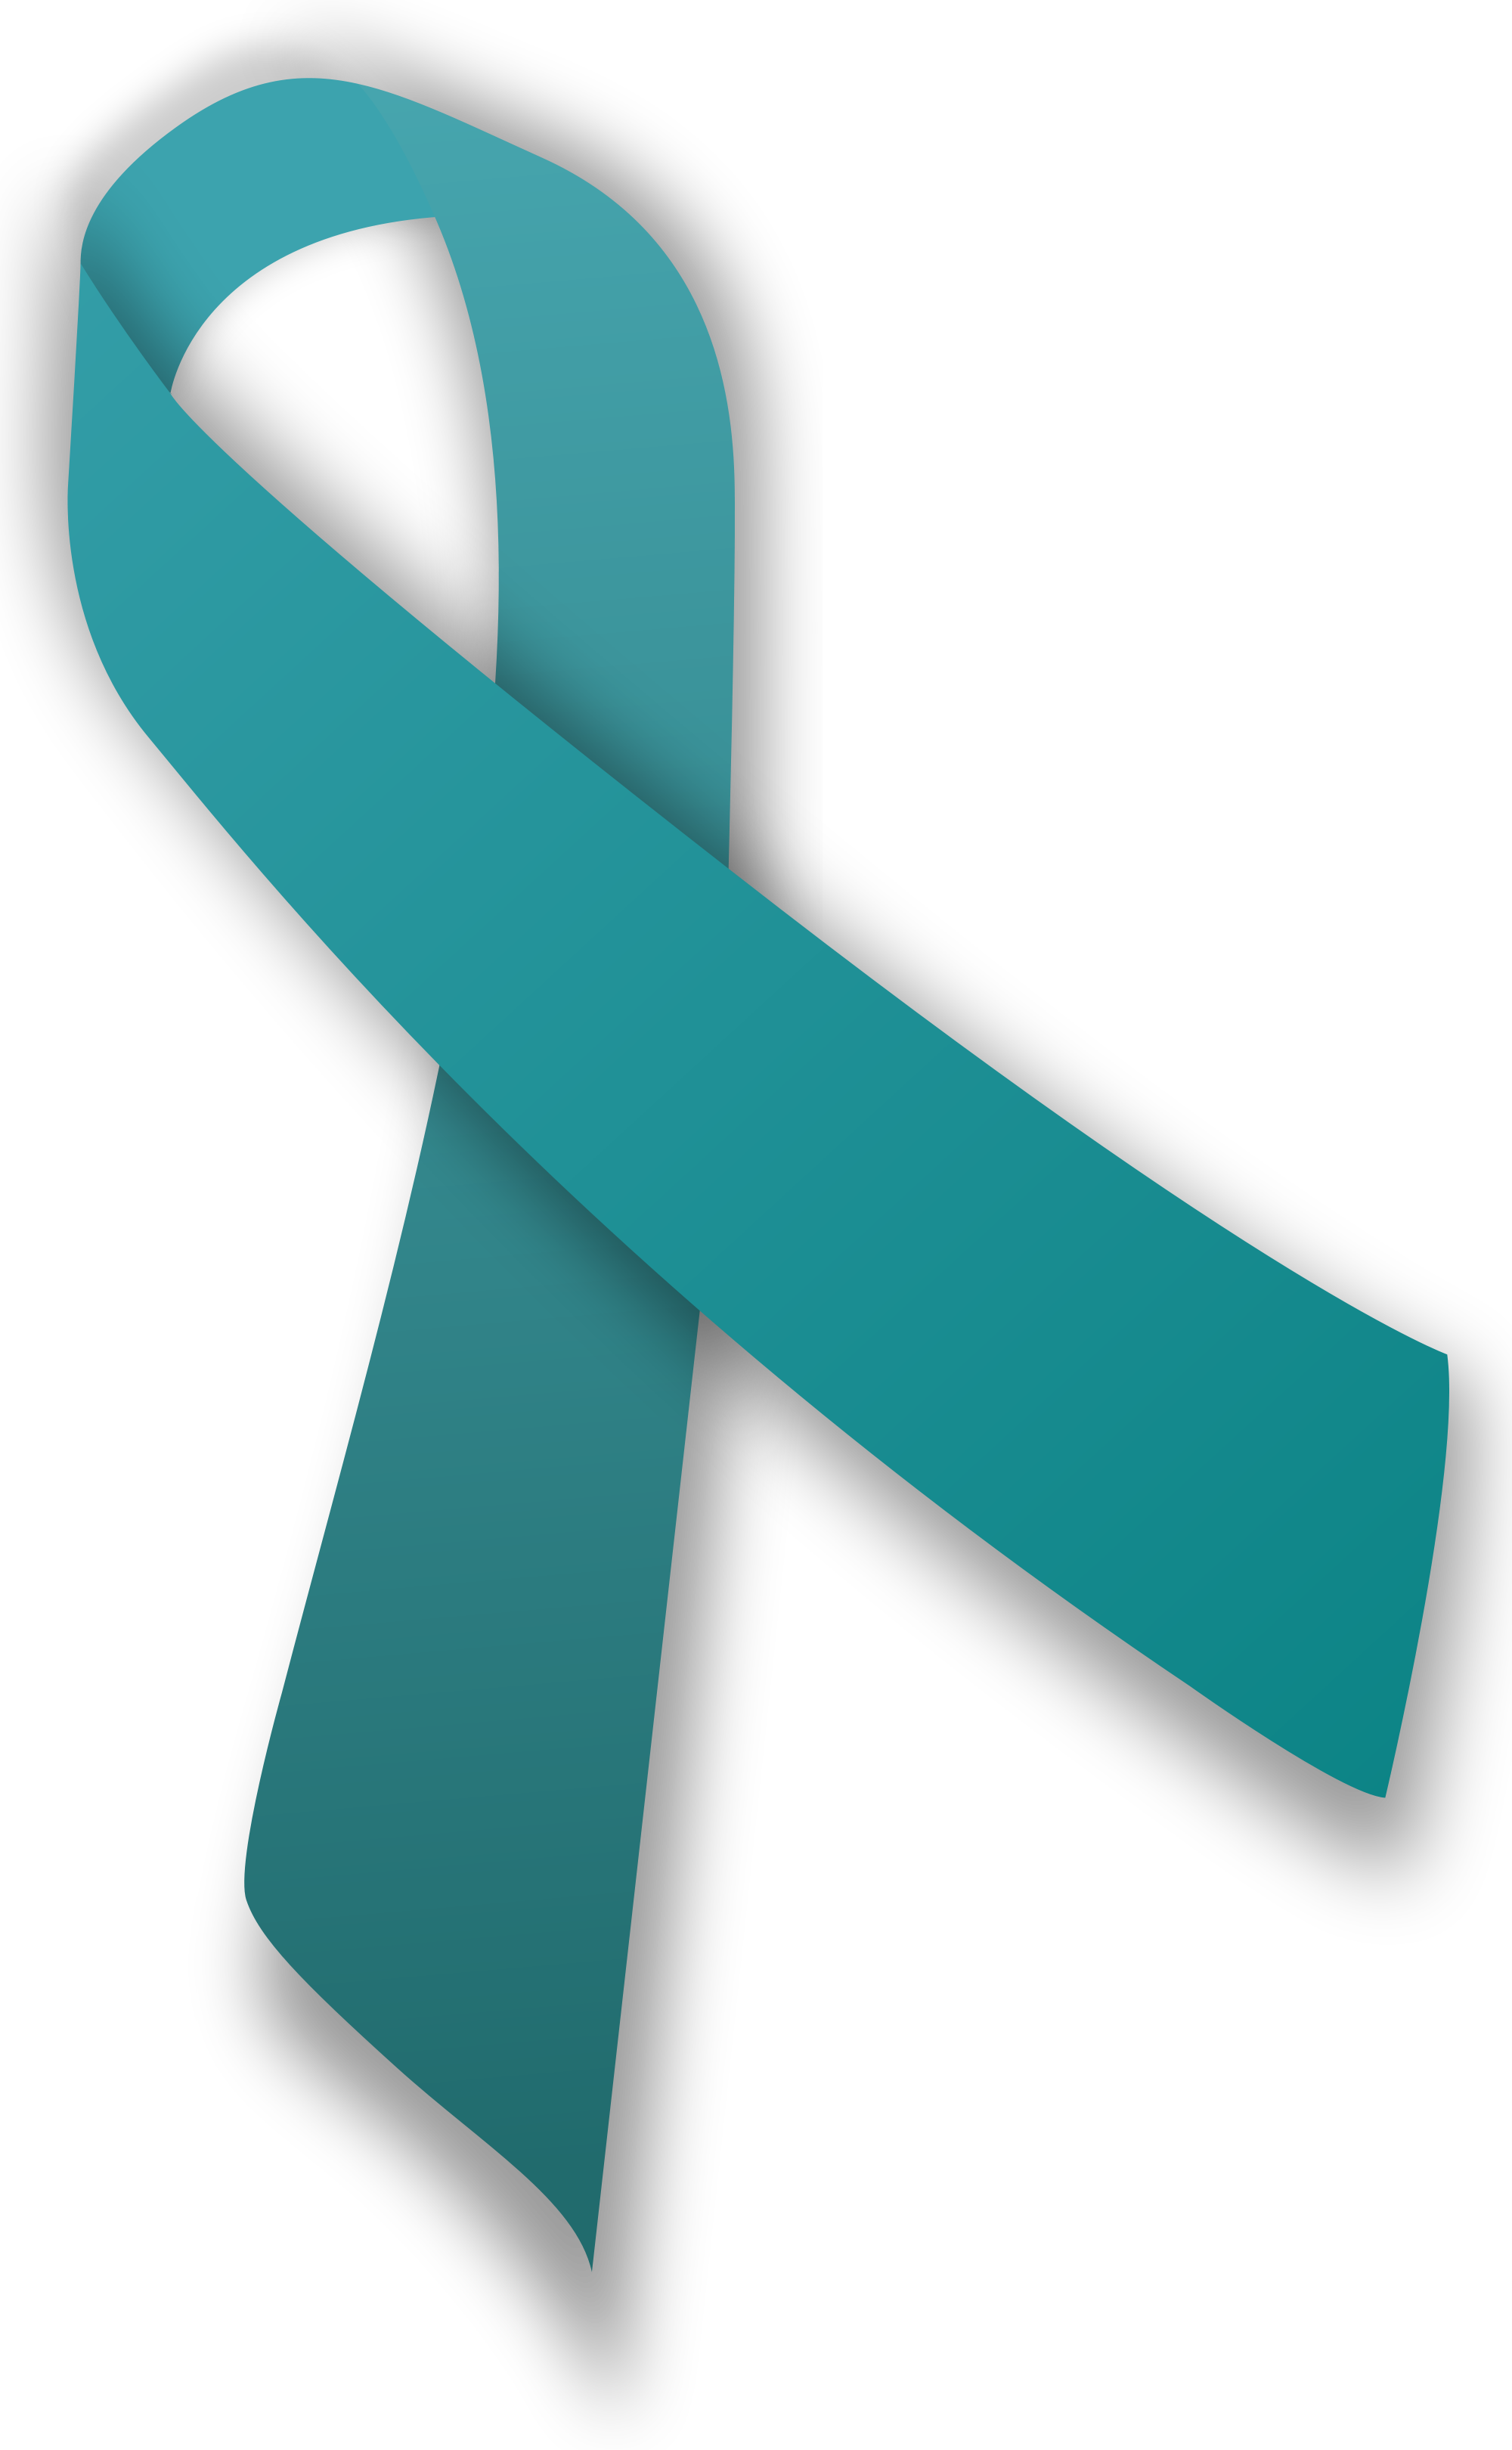 Turquoise Ribbon PNG Image Background